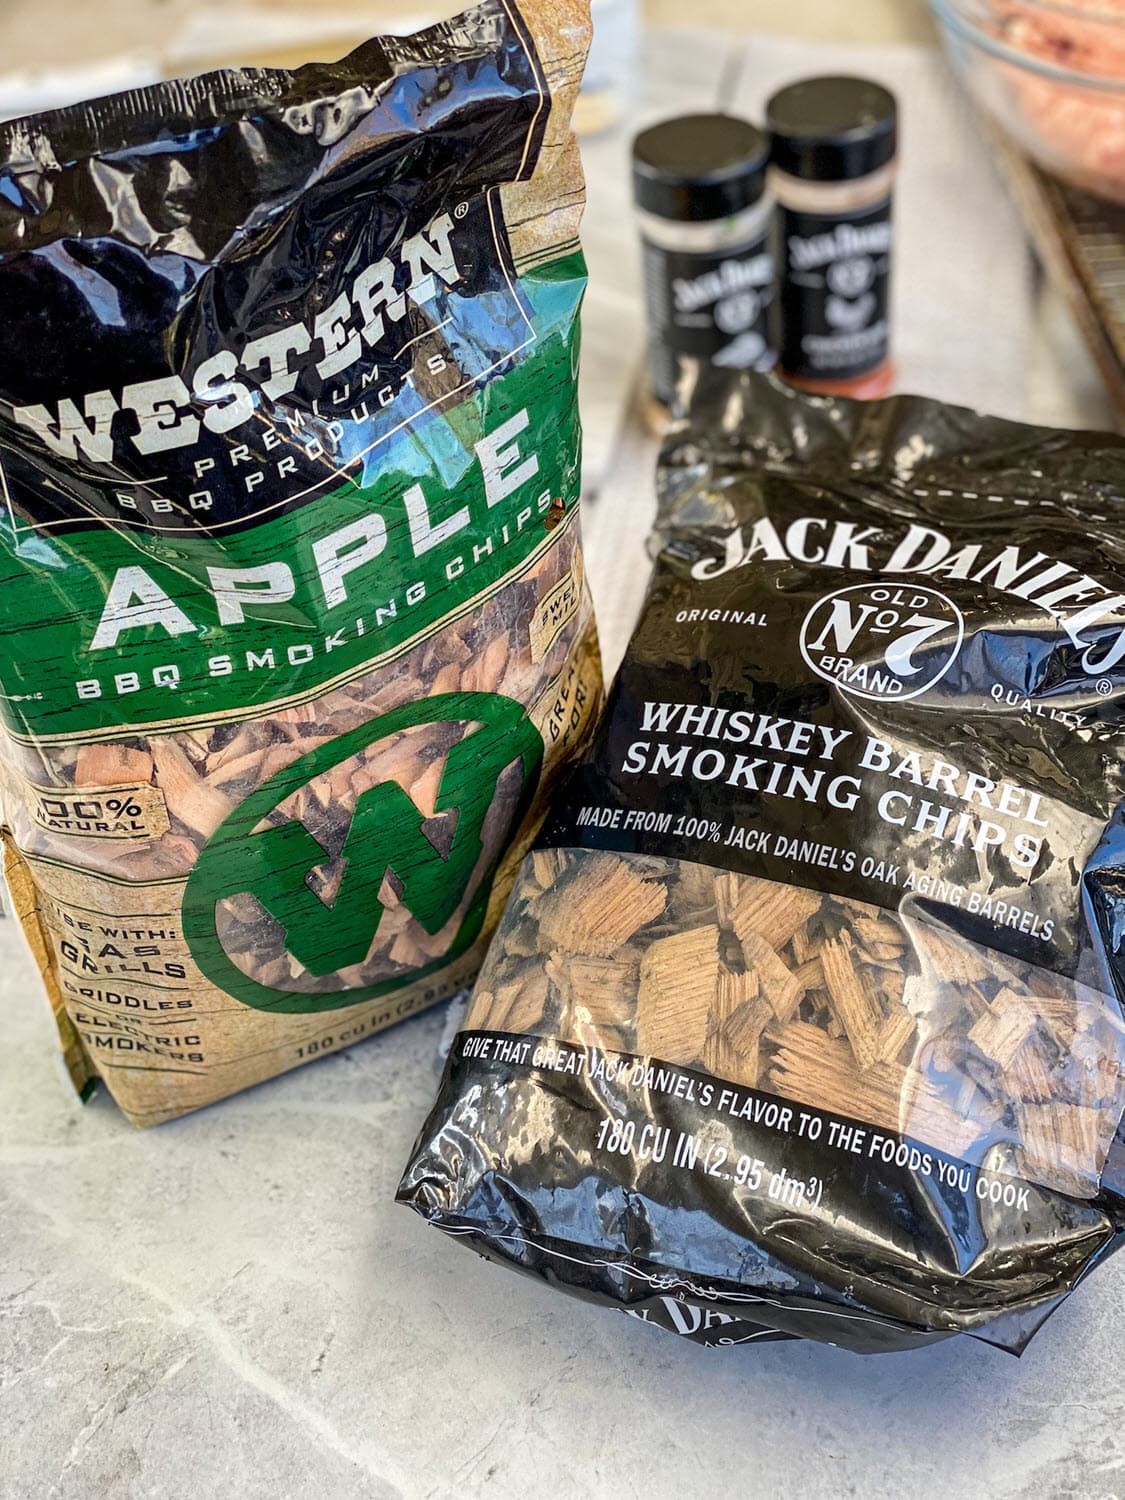 Western Apple Smoking Chips bag, Jack Daniel's Whiskey Barrel Smoking Chips and Jack Daniel's rubs in background